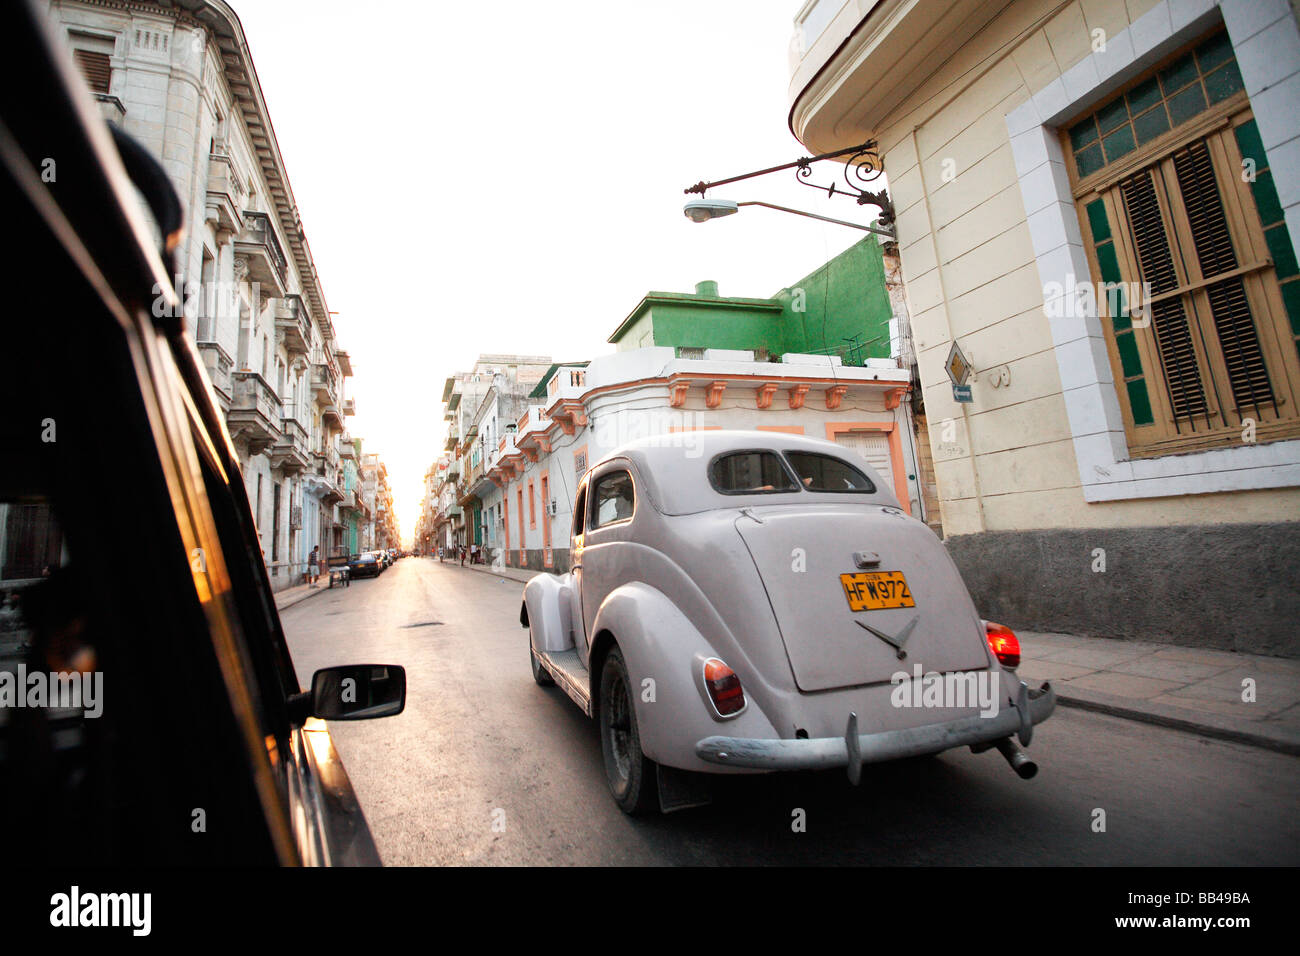 An antique car in Havana, Cuba Stock Photo